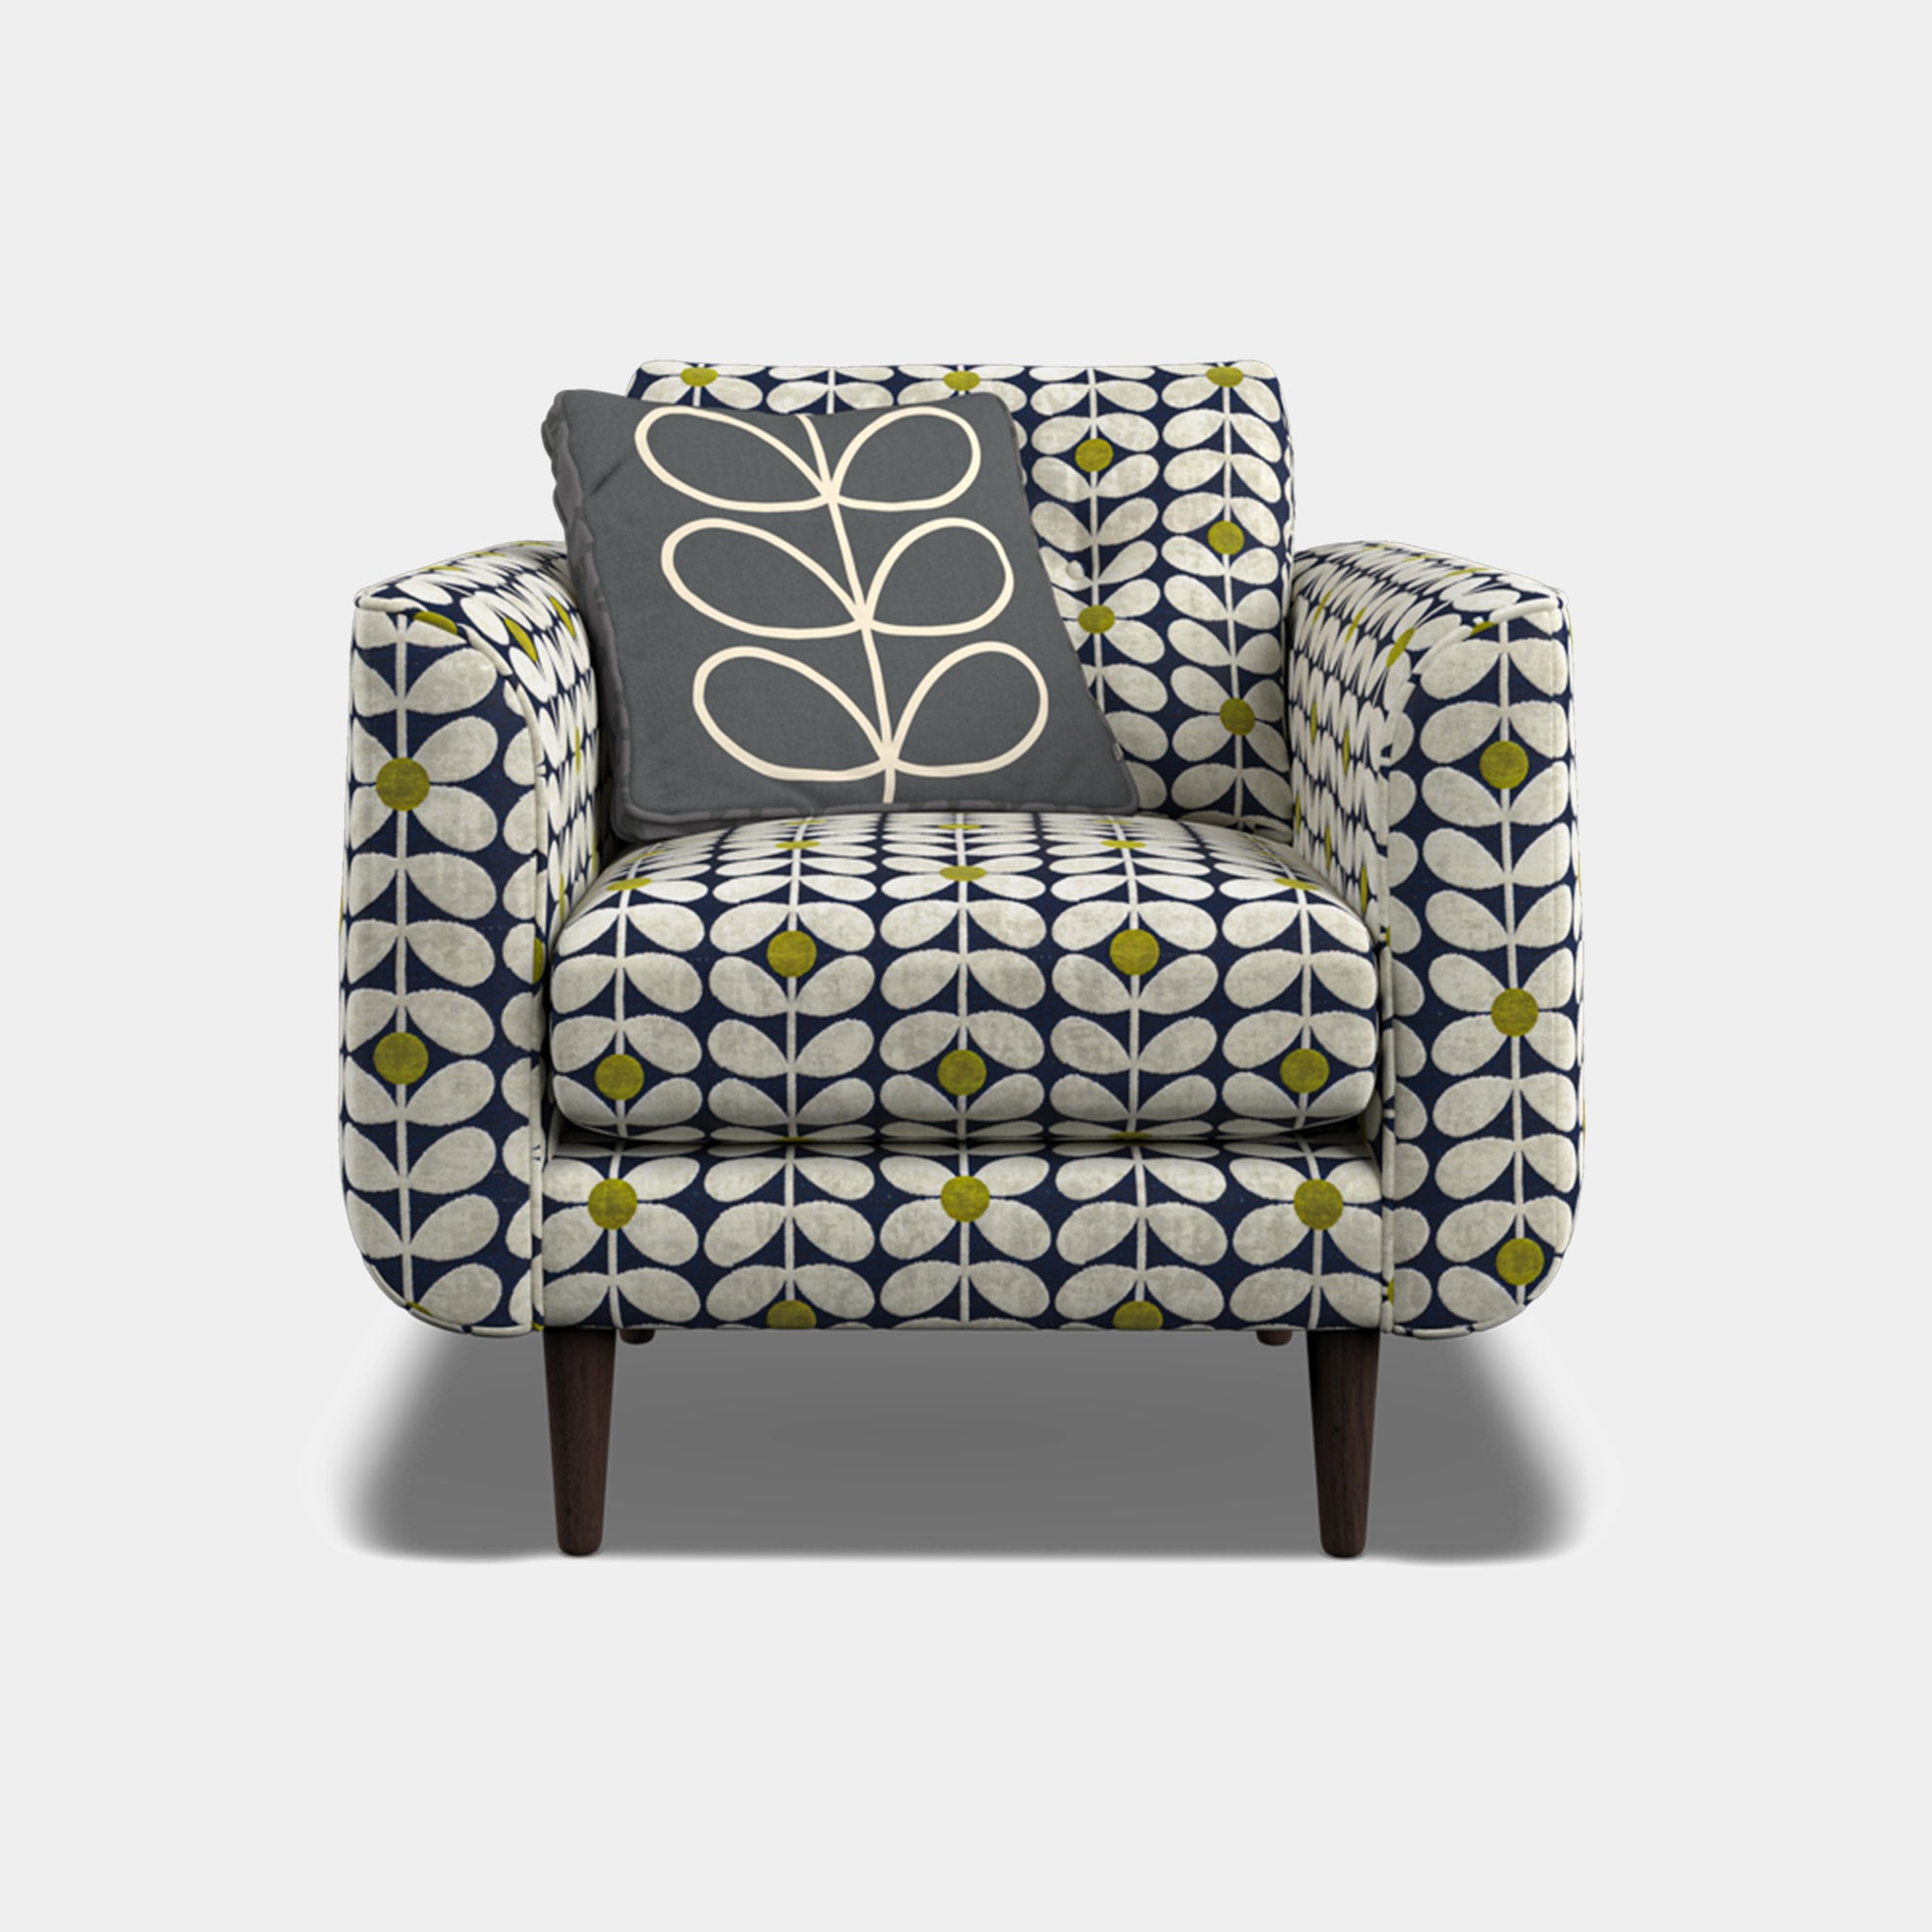 Orla kiely Linden - Chair In Fabric Grade C